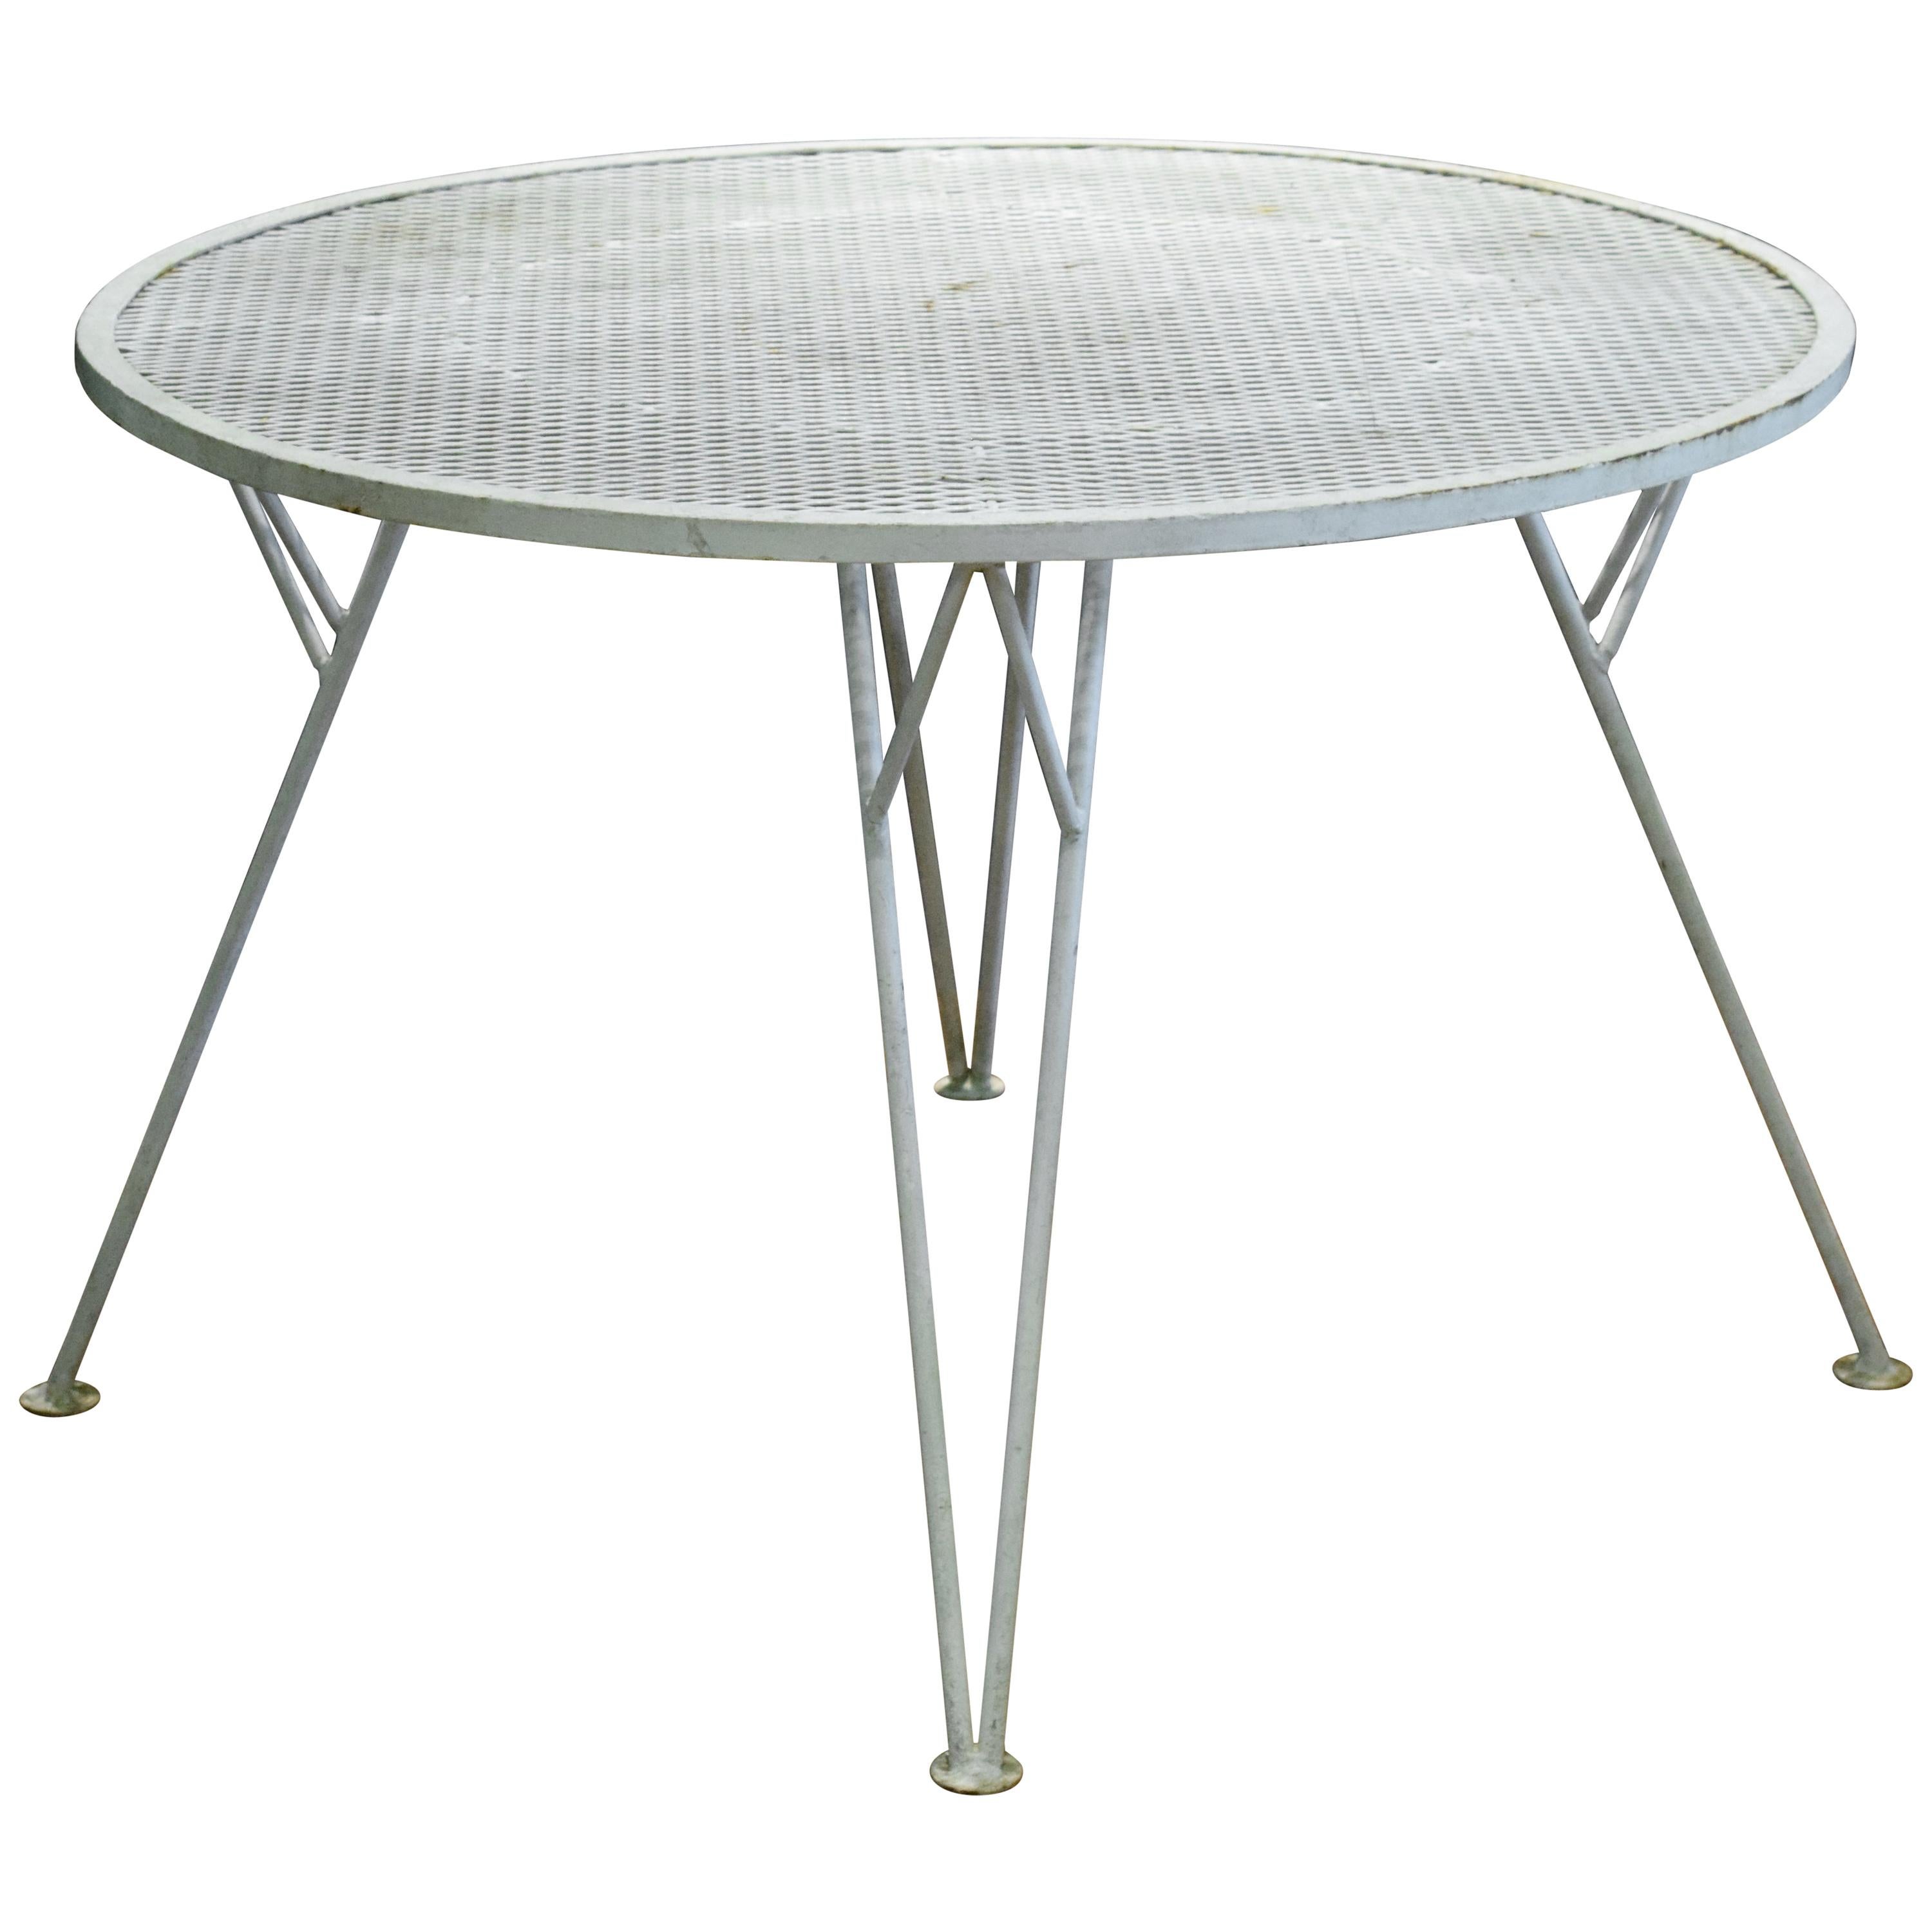 Wrought iron table by Maurizio Tempestini for Salterini.